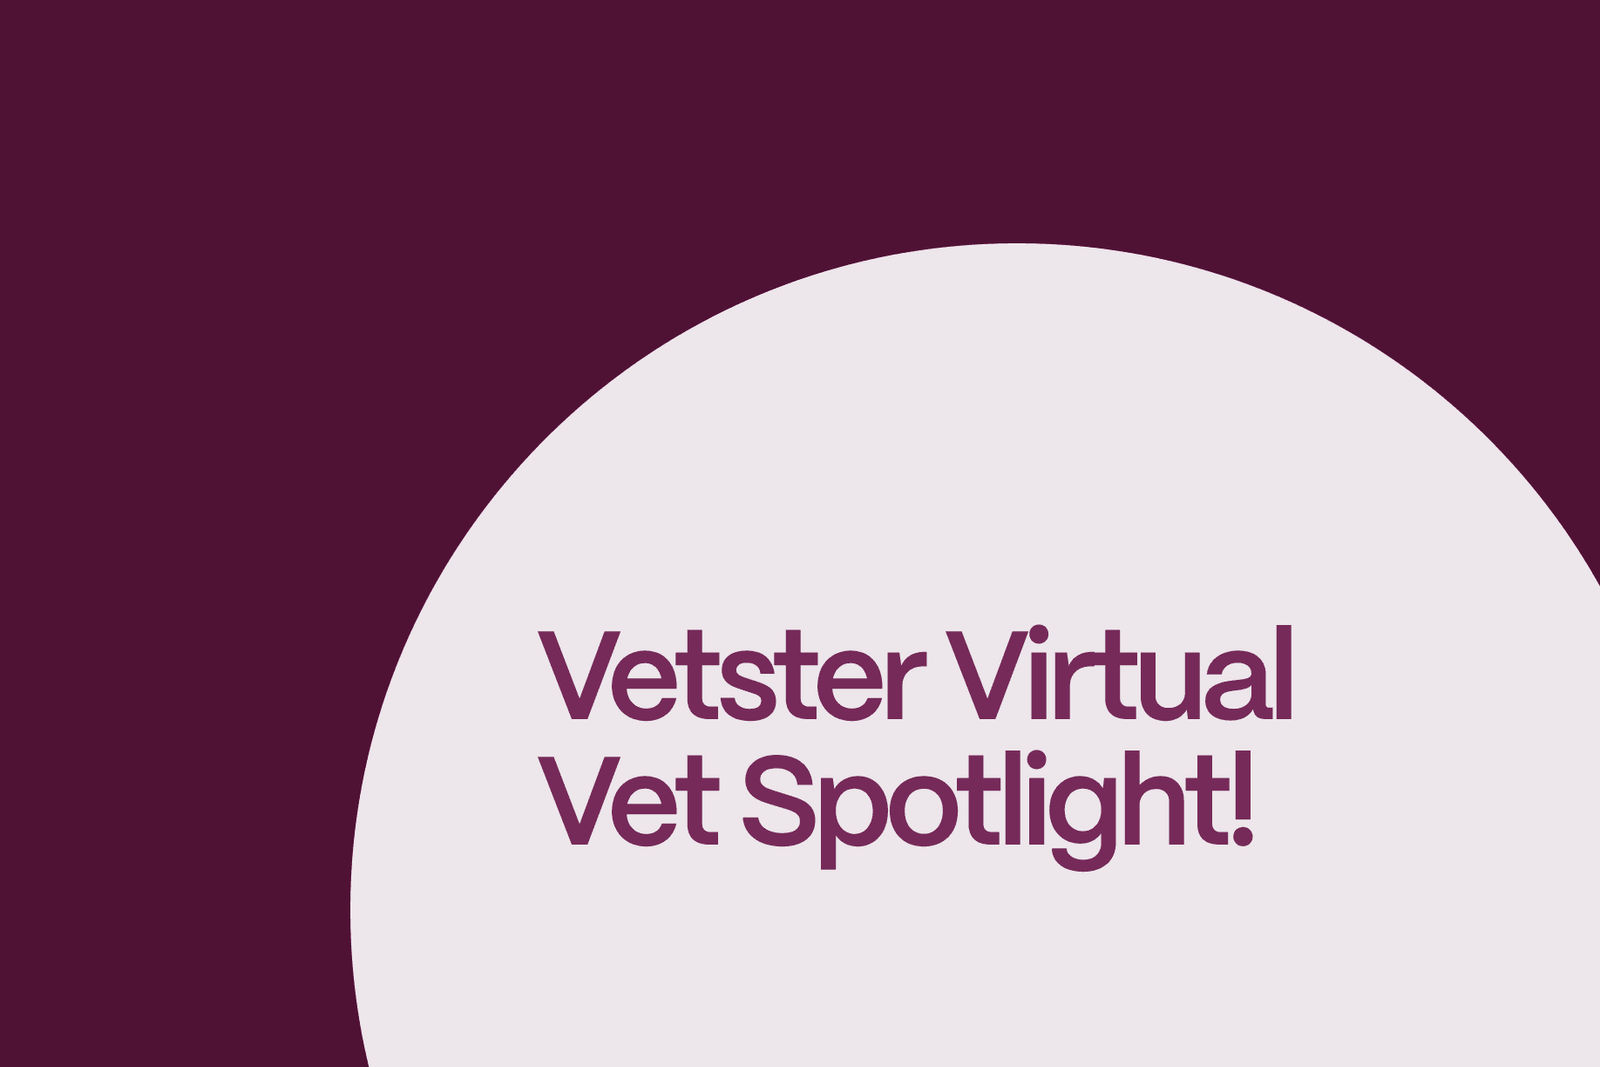 Vet Spotlight: Dr. Capuzzi shares her tips on conducting virtual bedside manner - Vetster